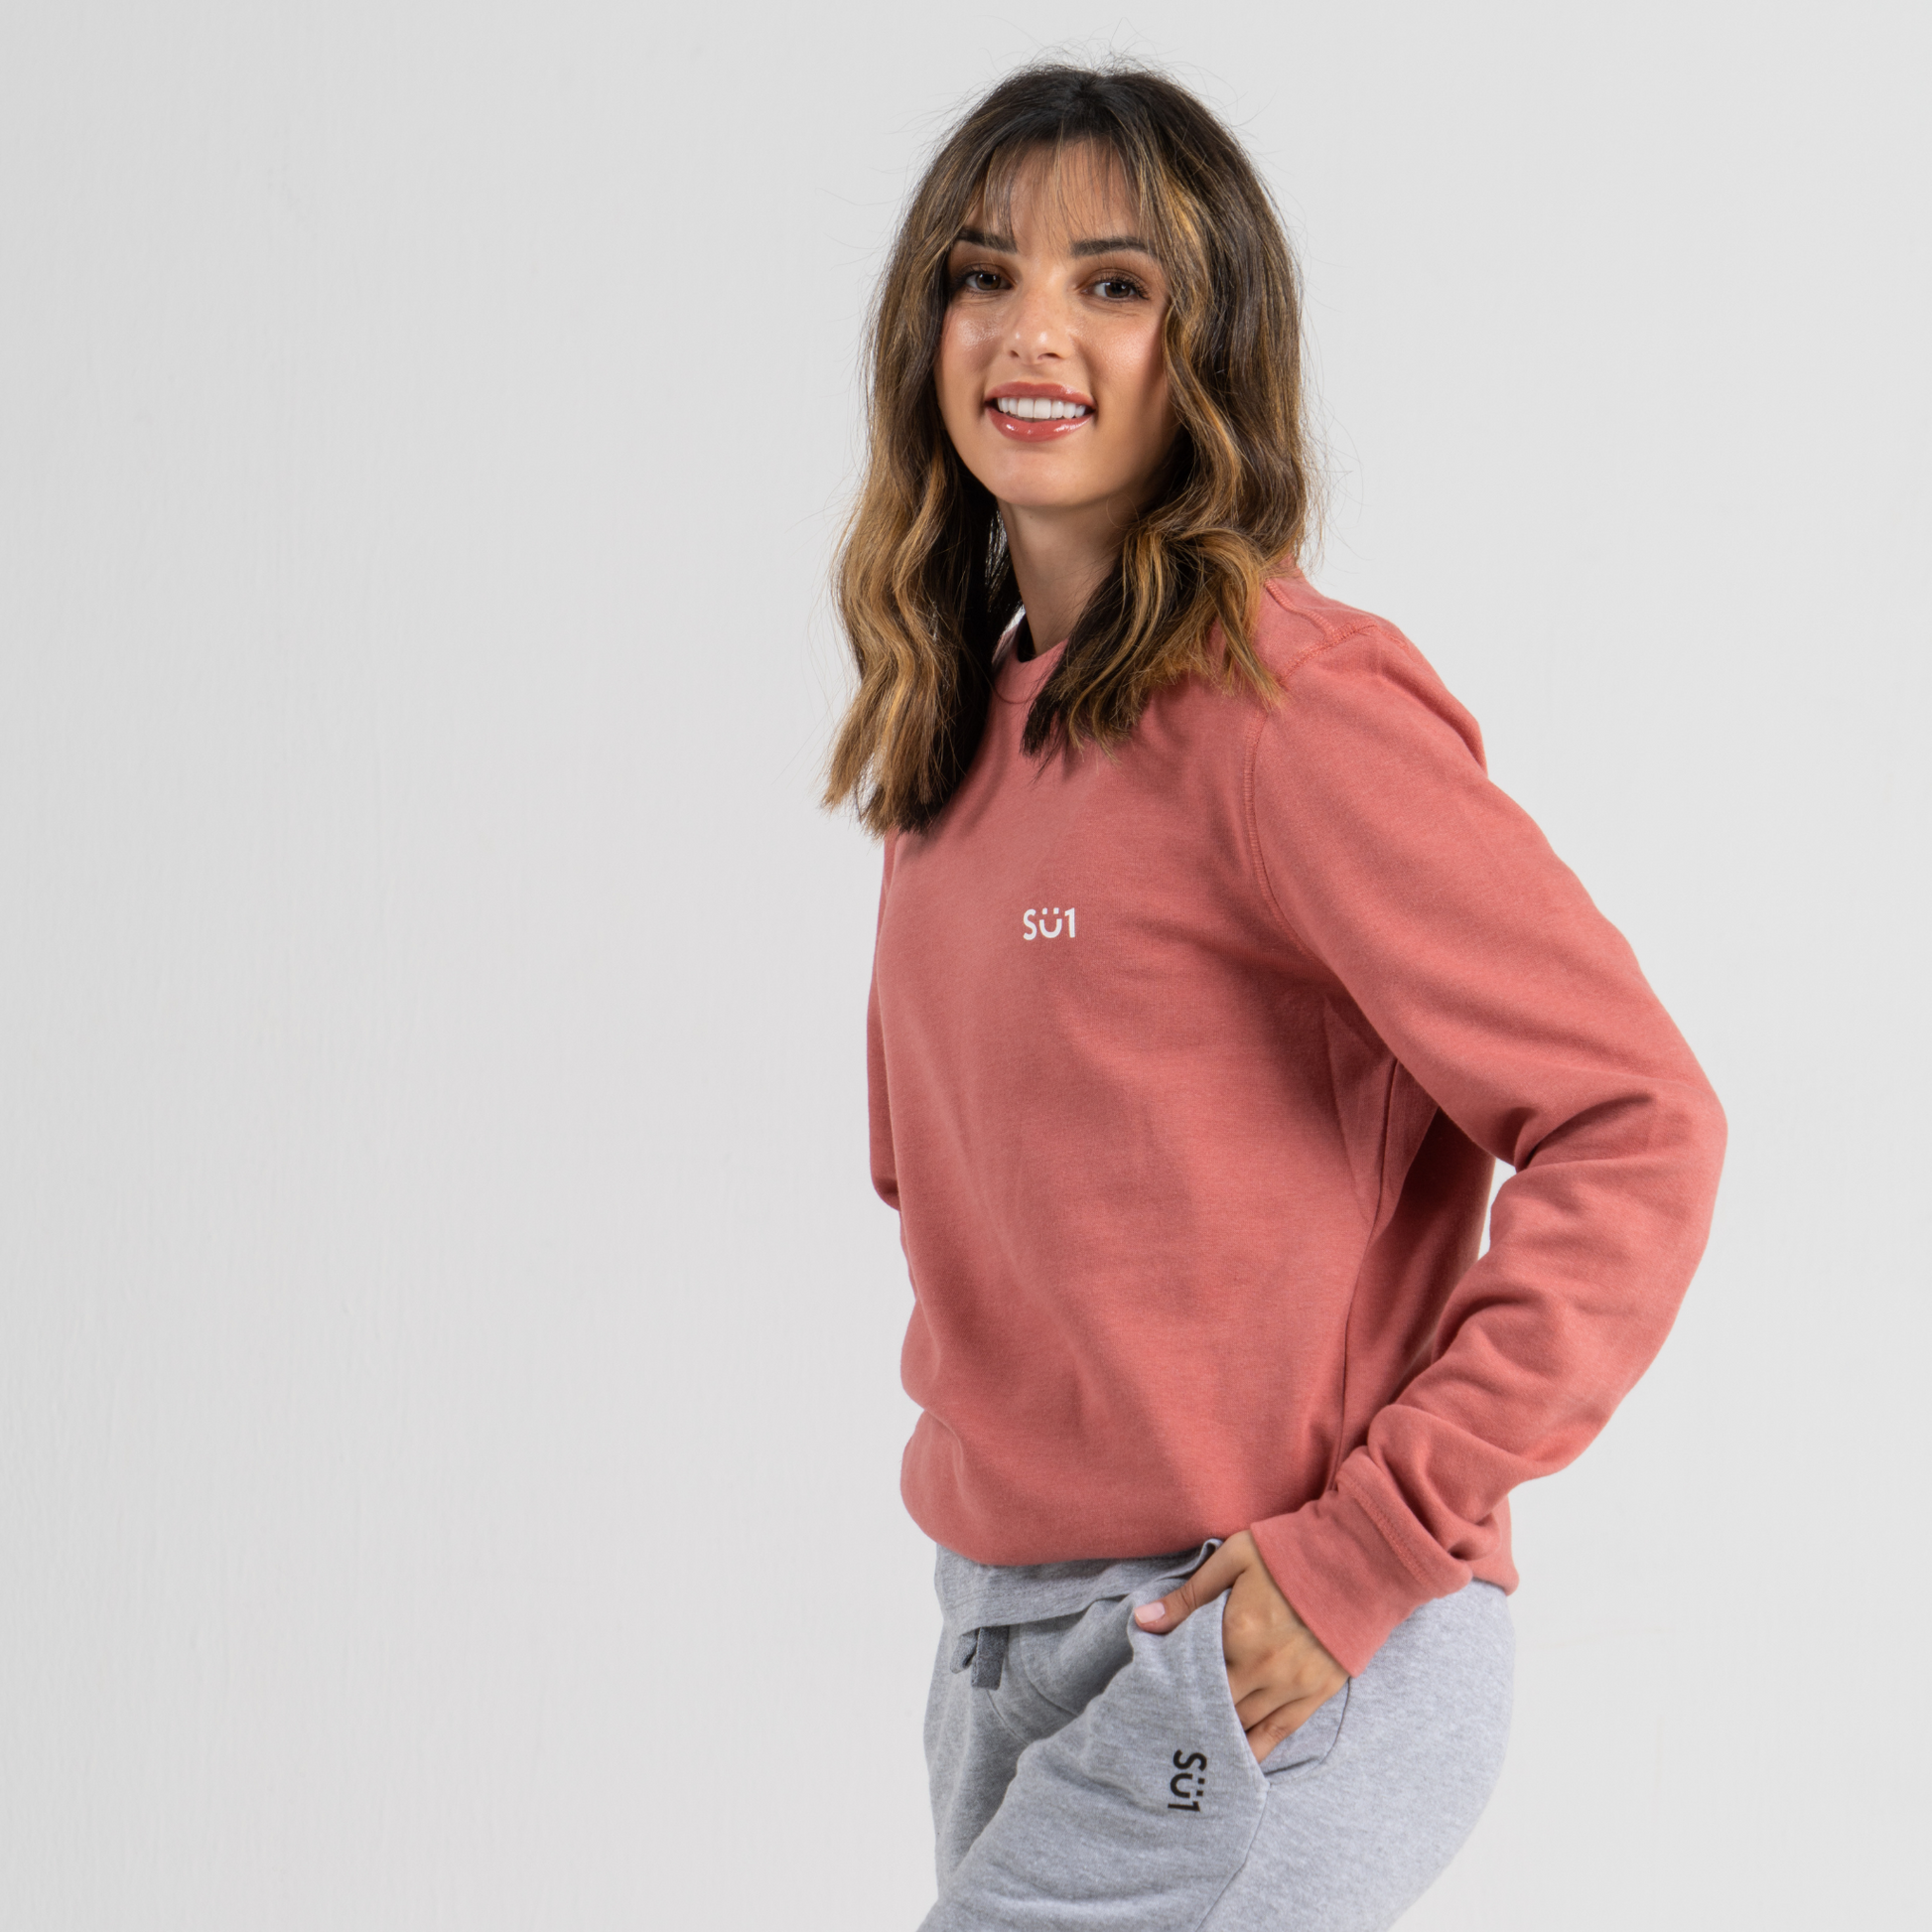 Woman wearing pink sweater SU1 clothing brand 